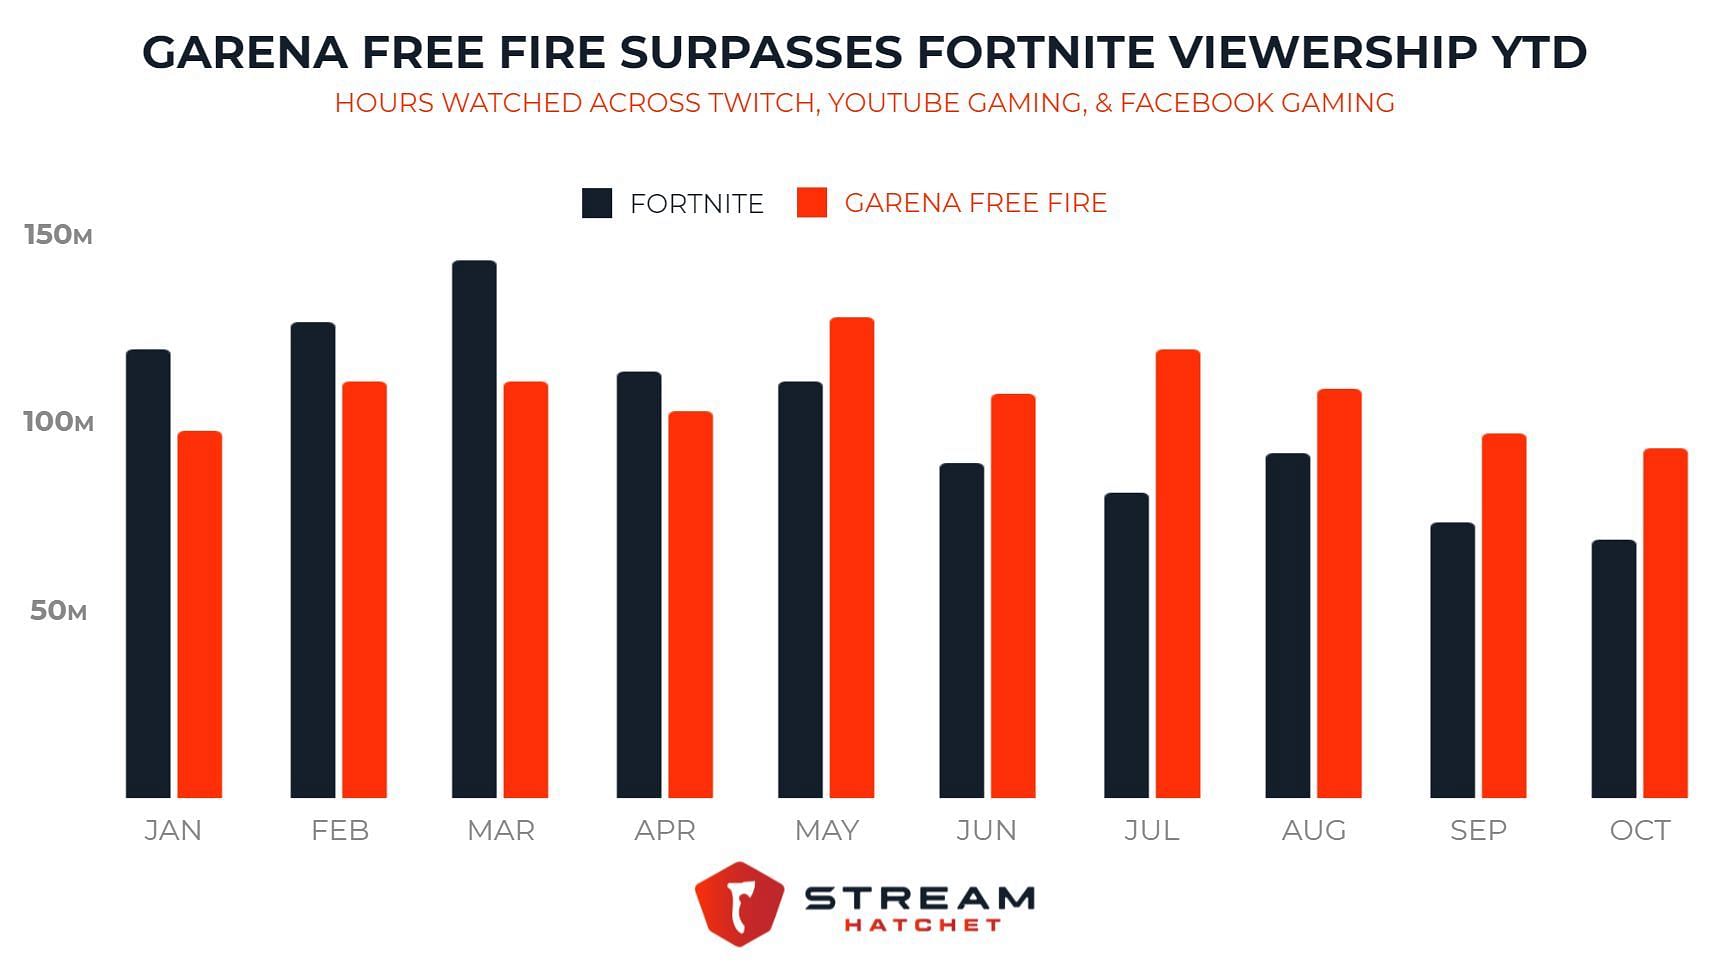 Free Fire vs Fortnite monthly viewership in 2021 so far (Image via Stream Hatchet)